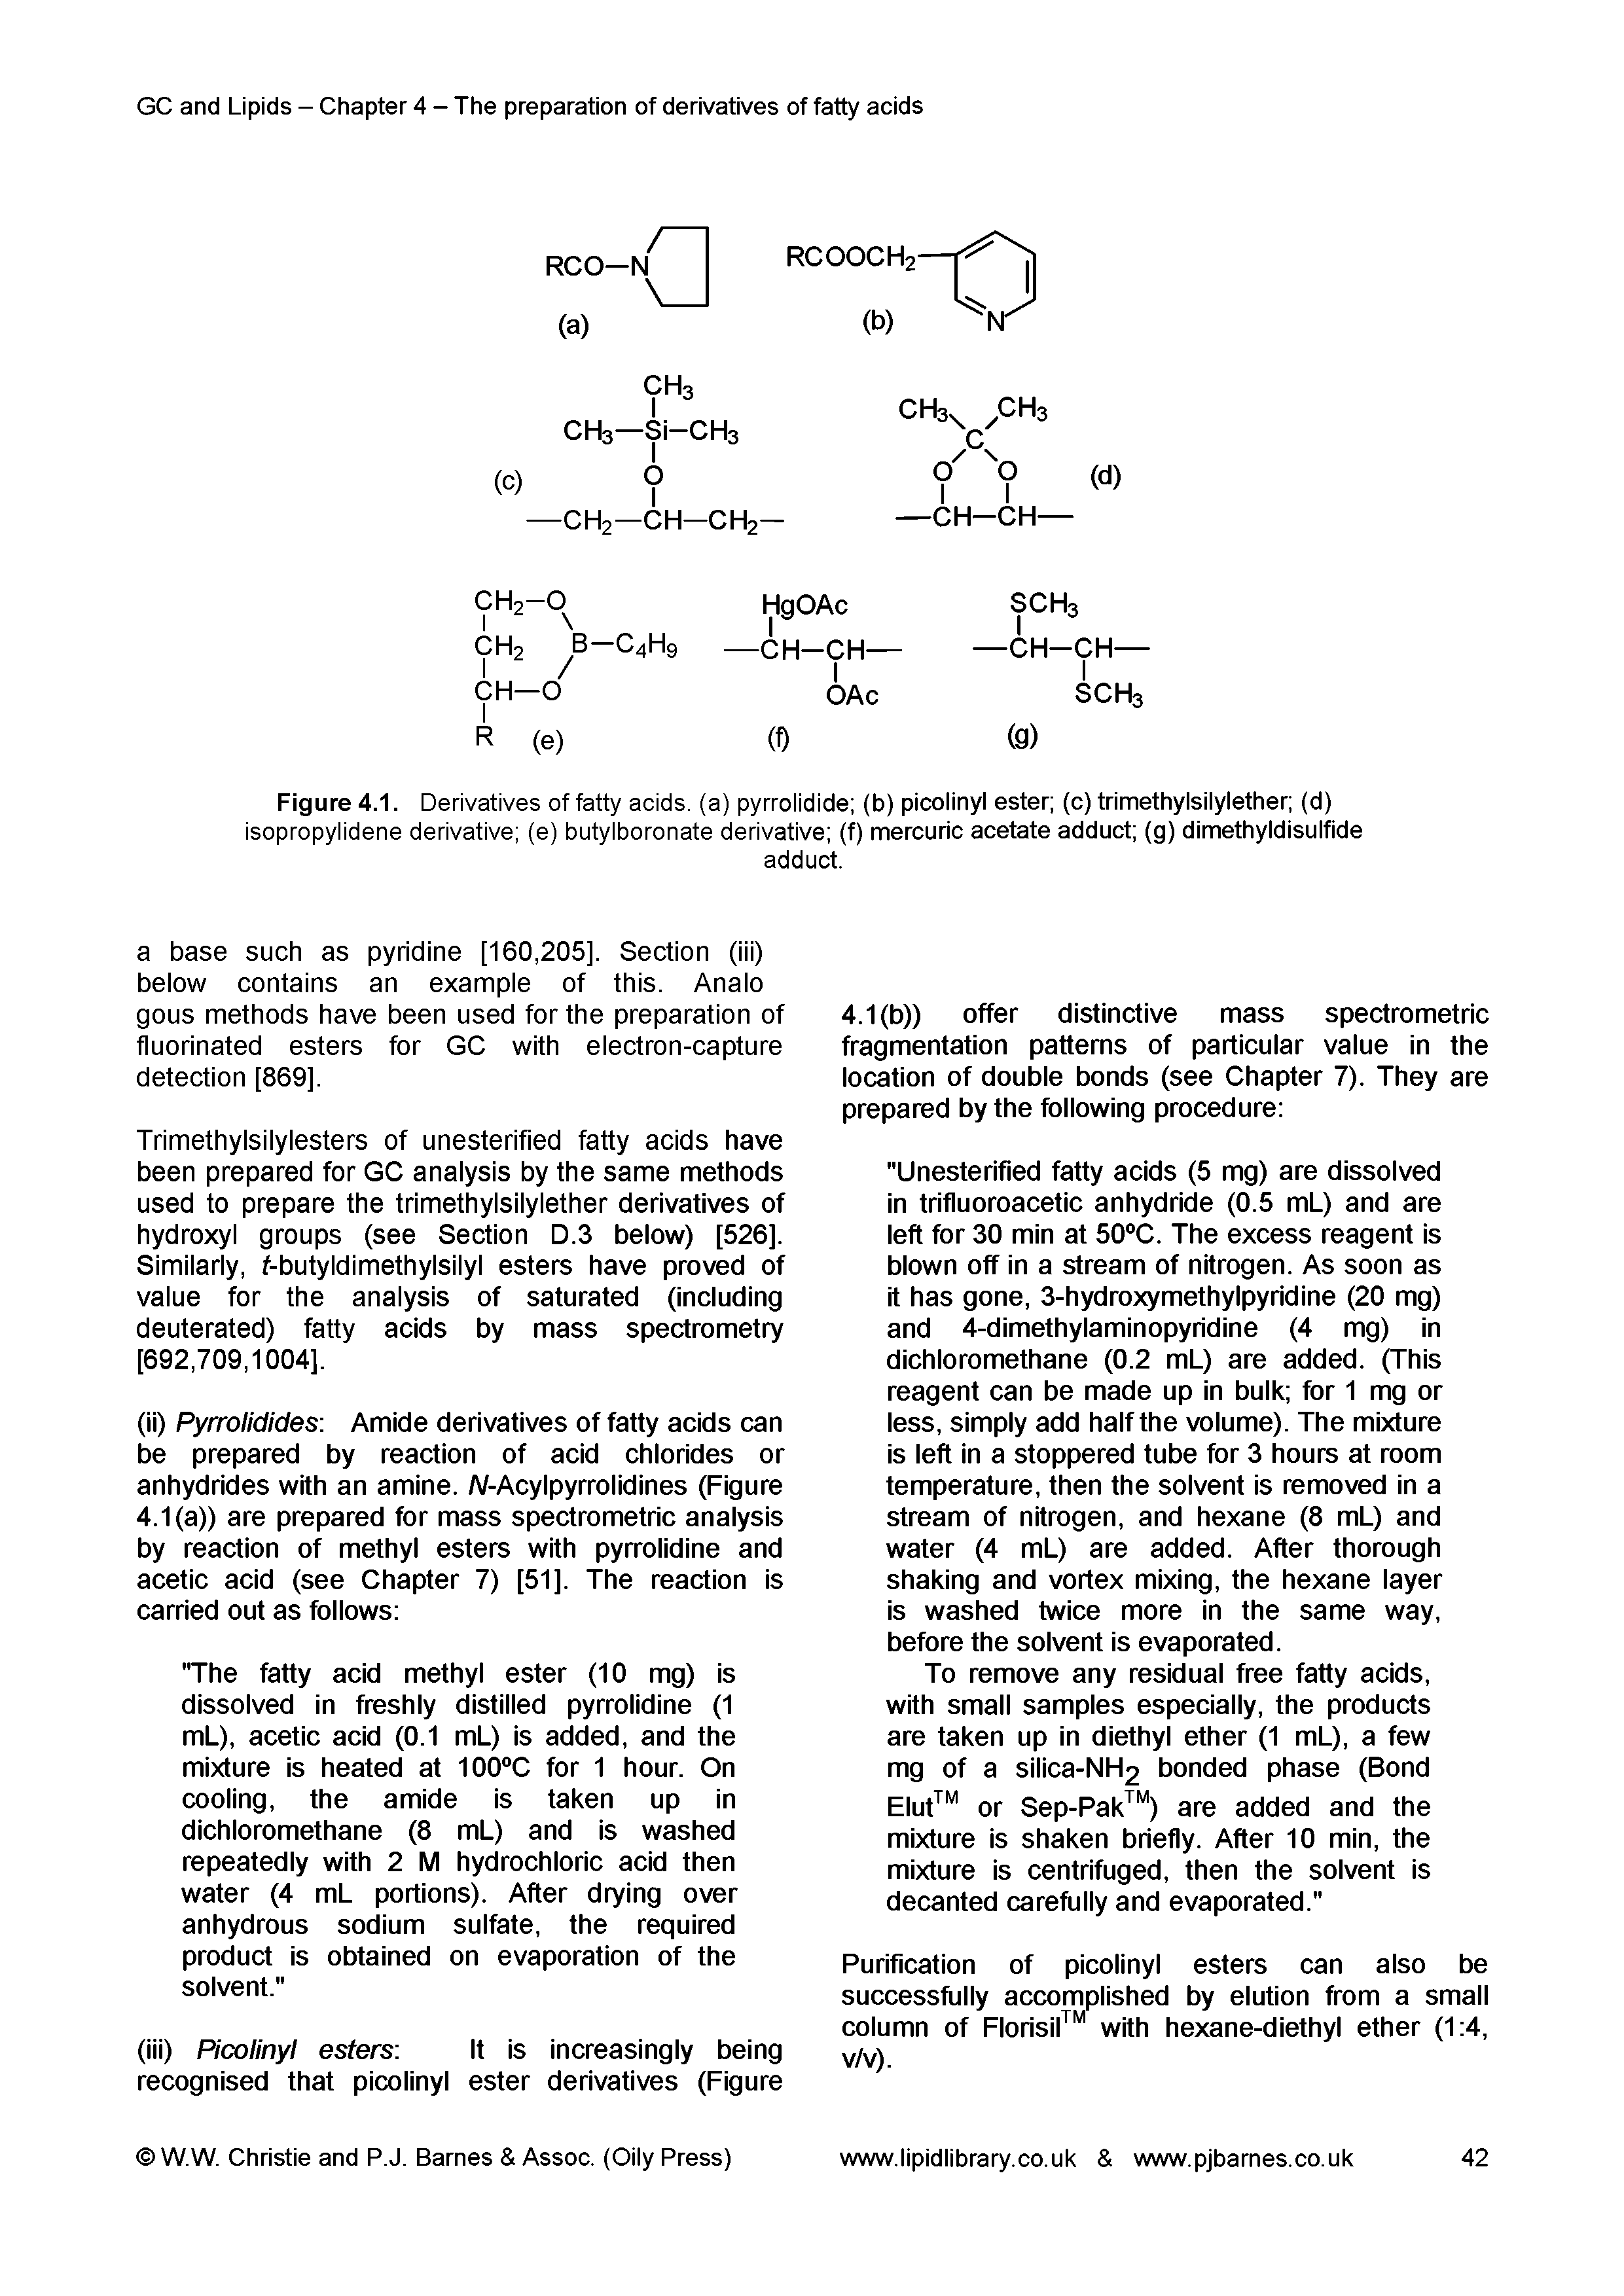 Figure 4.1. Derivatives of fatty acids, (a) pyrrolidide (b) picolinyl ester (c) trimethylsilylether (d) isopropylidene derivative (e) butylboronate derivative (f) mercuric acetate adduct (g) dimethyidisulfide...